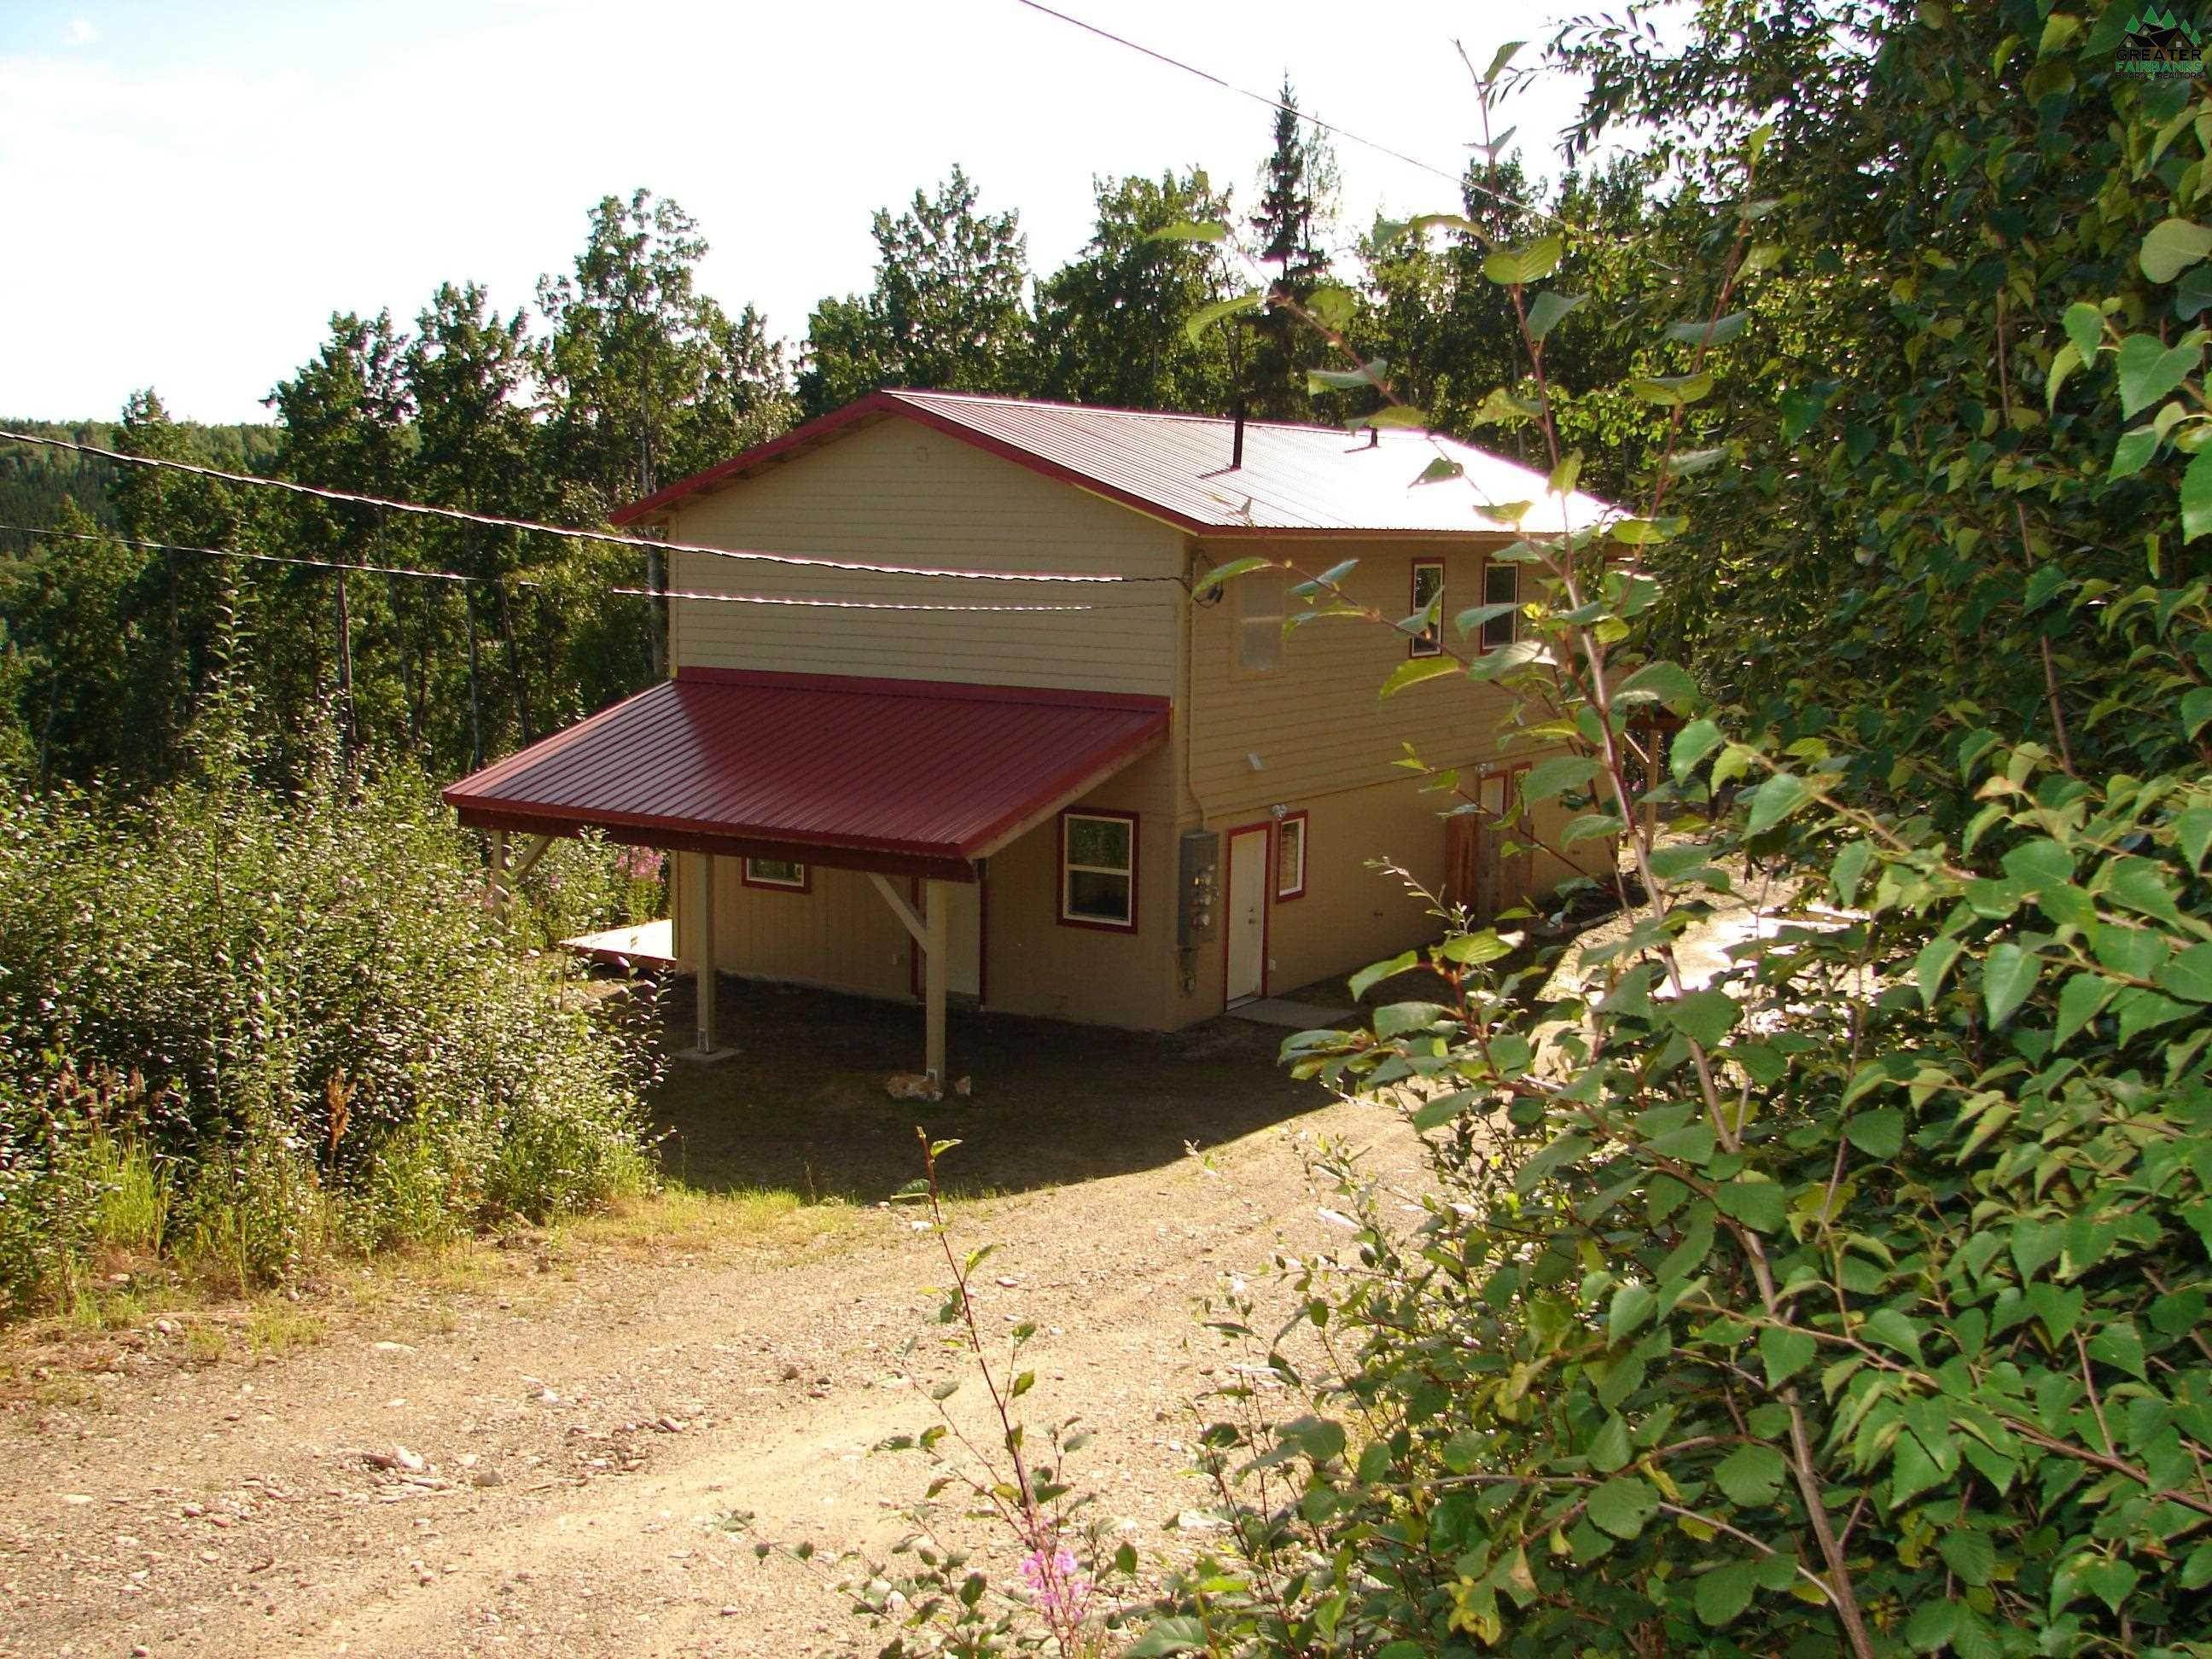 Duplex Homes for Sale at 1278 CARTLEB ROAD Fairbanks, Alaska 99712 United States